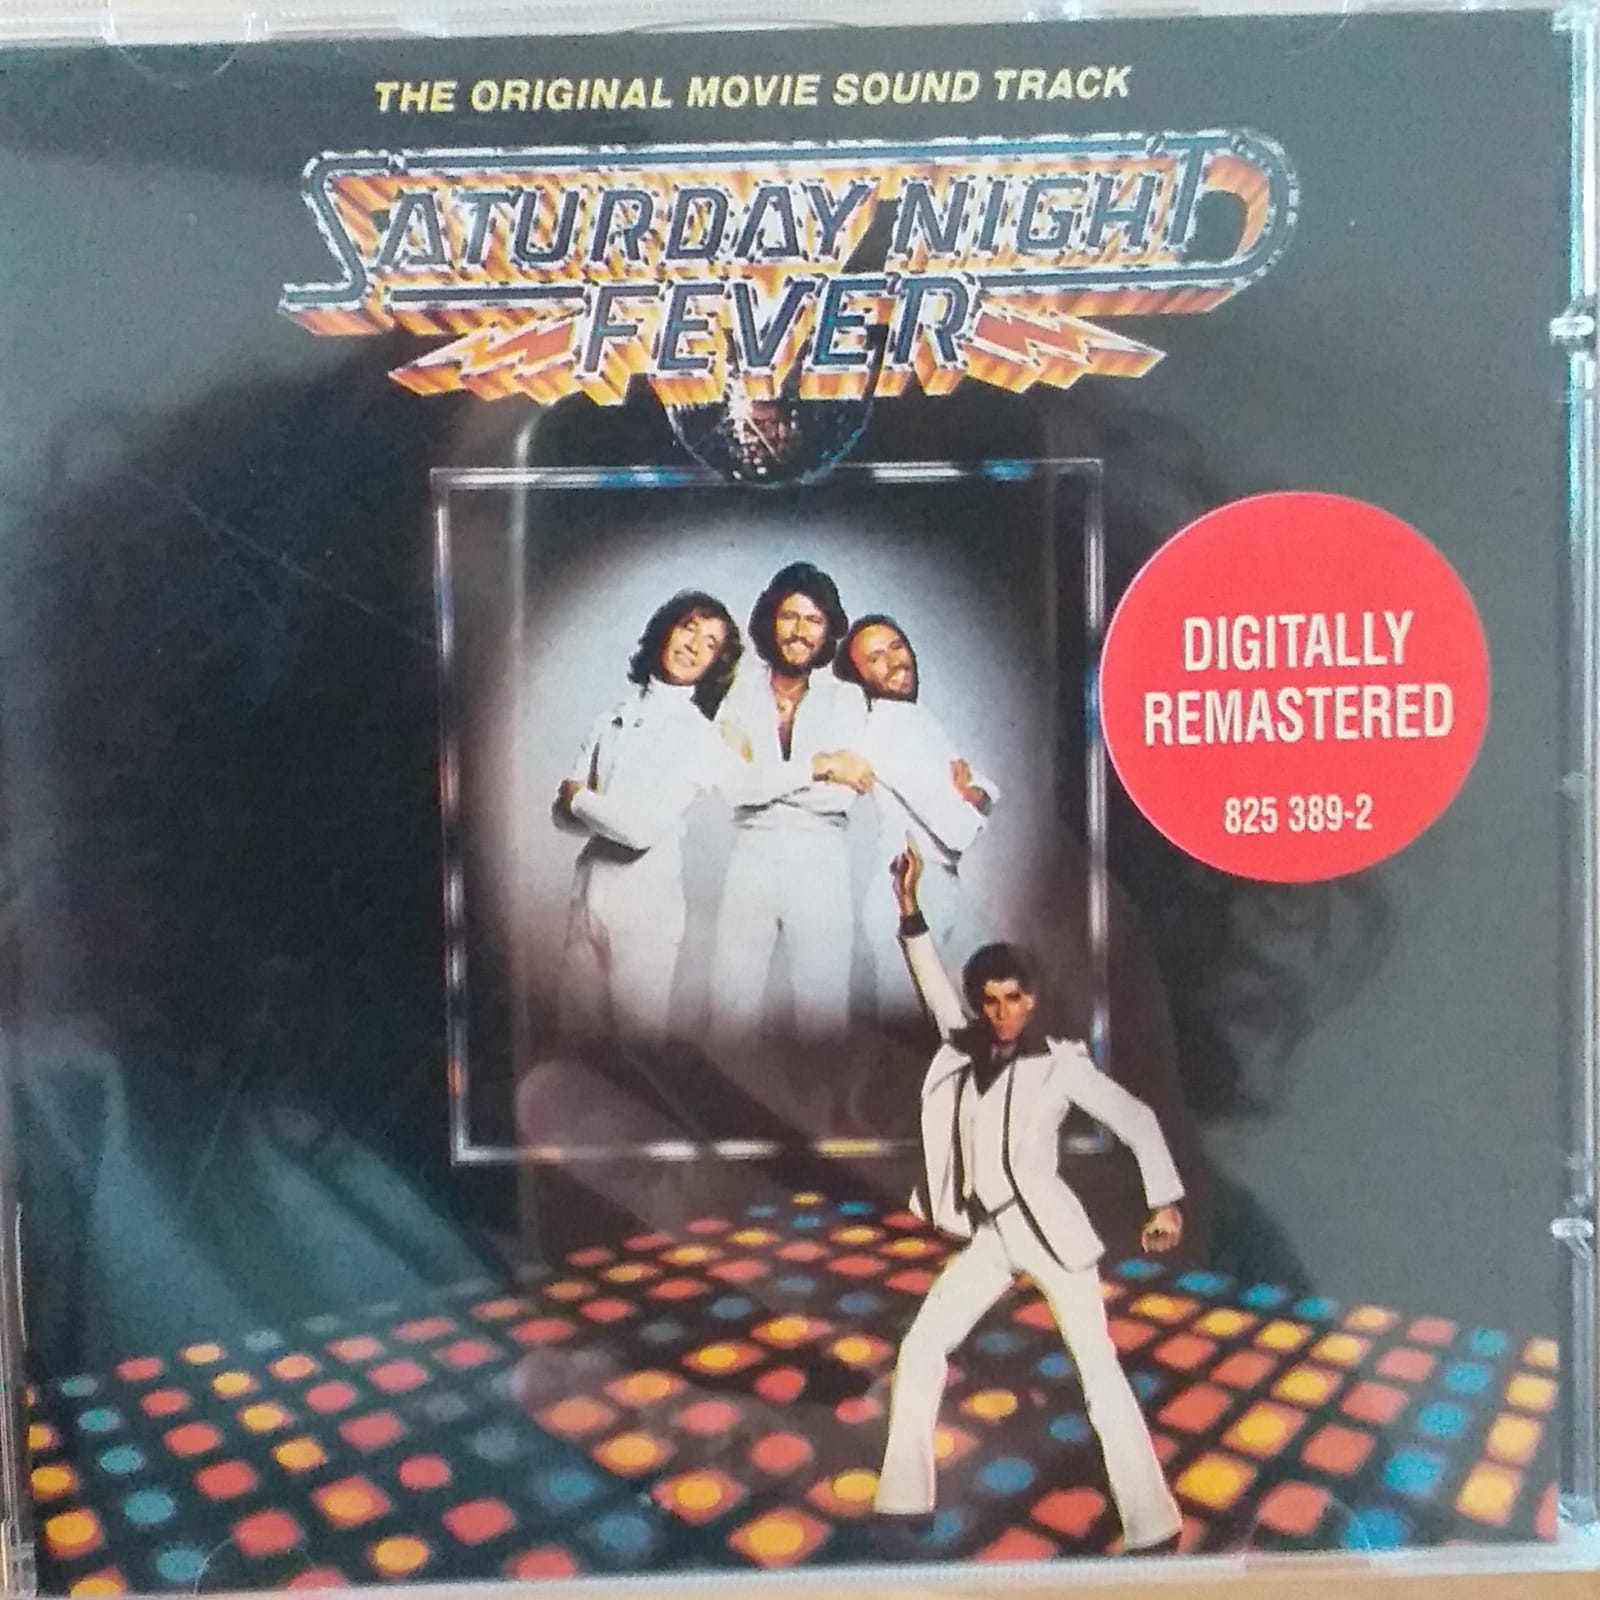 Imagem da banda sonora Sataurday Night Fever com John Travolta